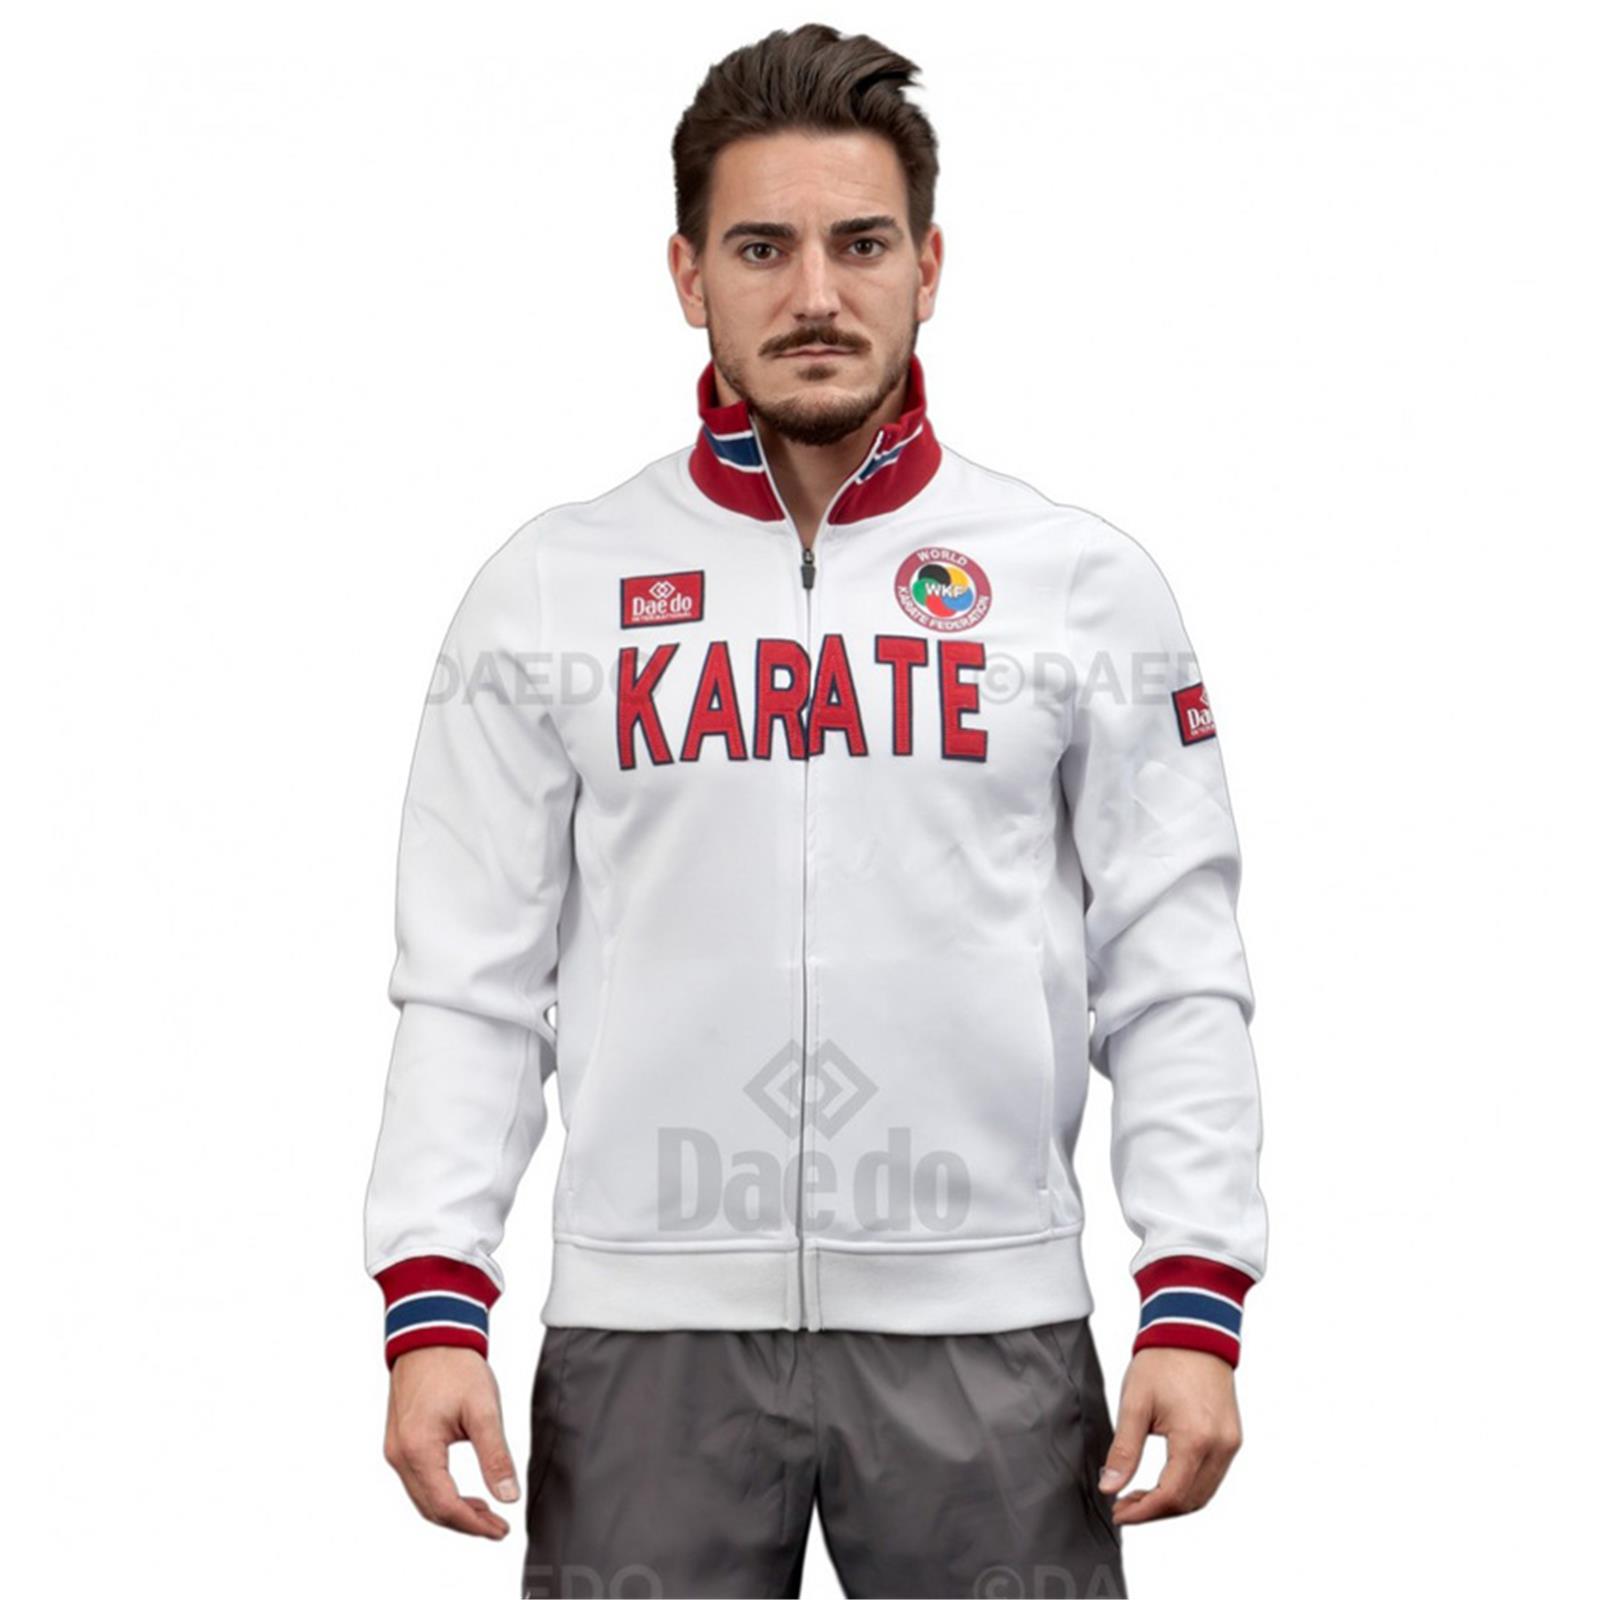 Dae Do Felpa Sportiva Karate slim jacket bianca (2XL - BIANCO)